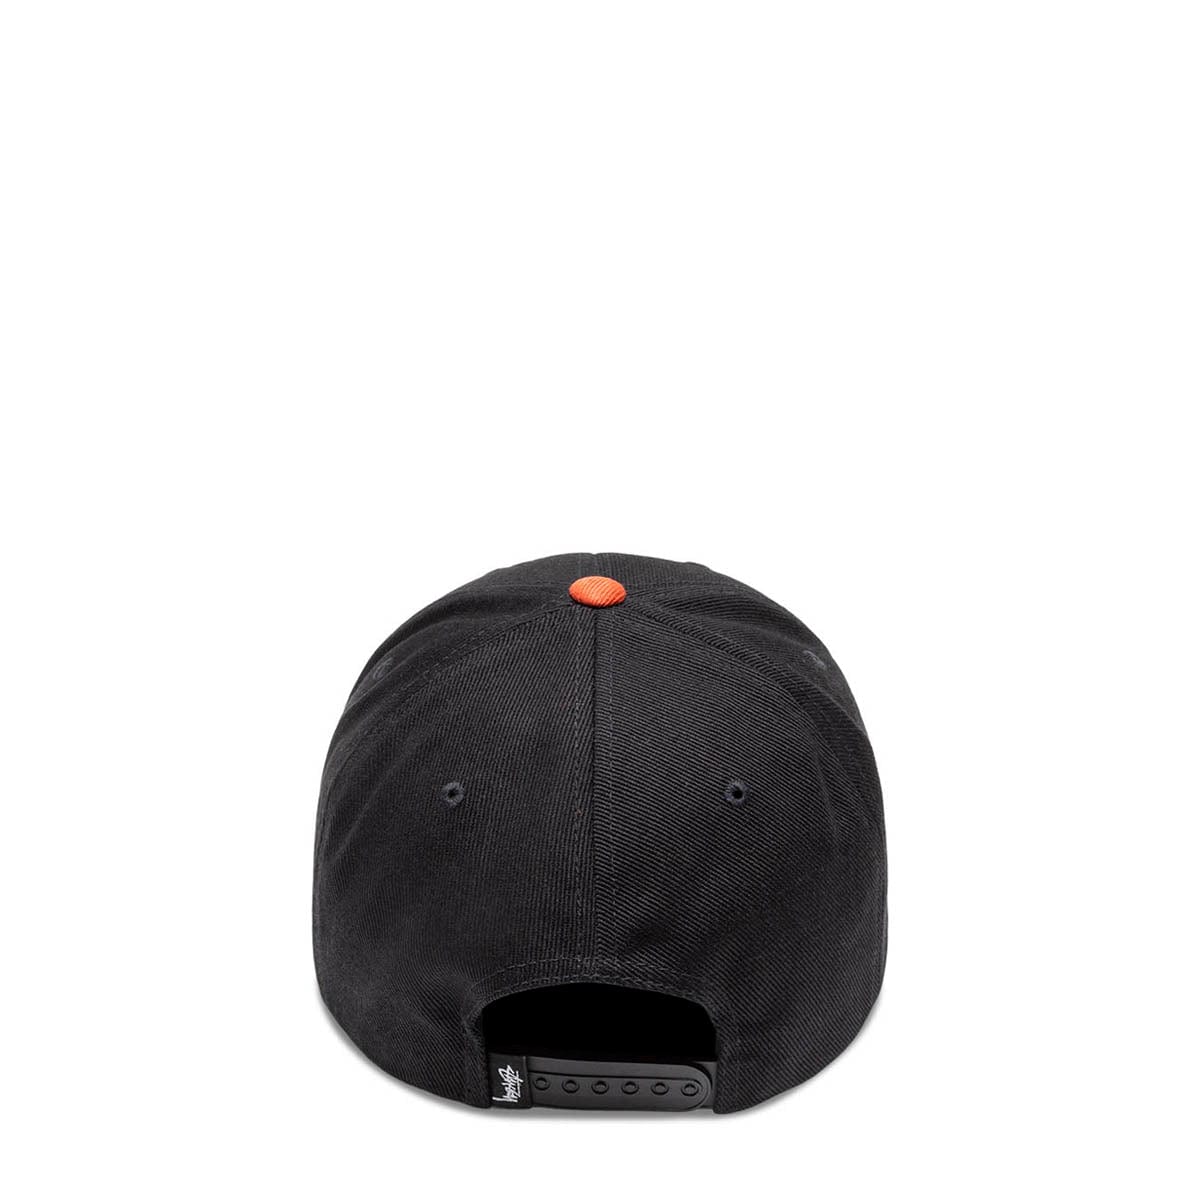 Stüssy Headwear BLACK / O/S TWILL STOCK 8 BALL CAP